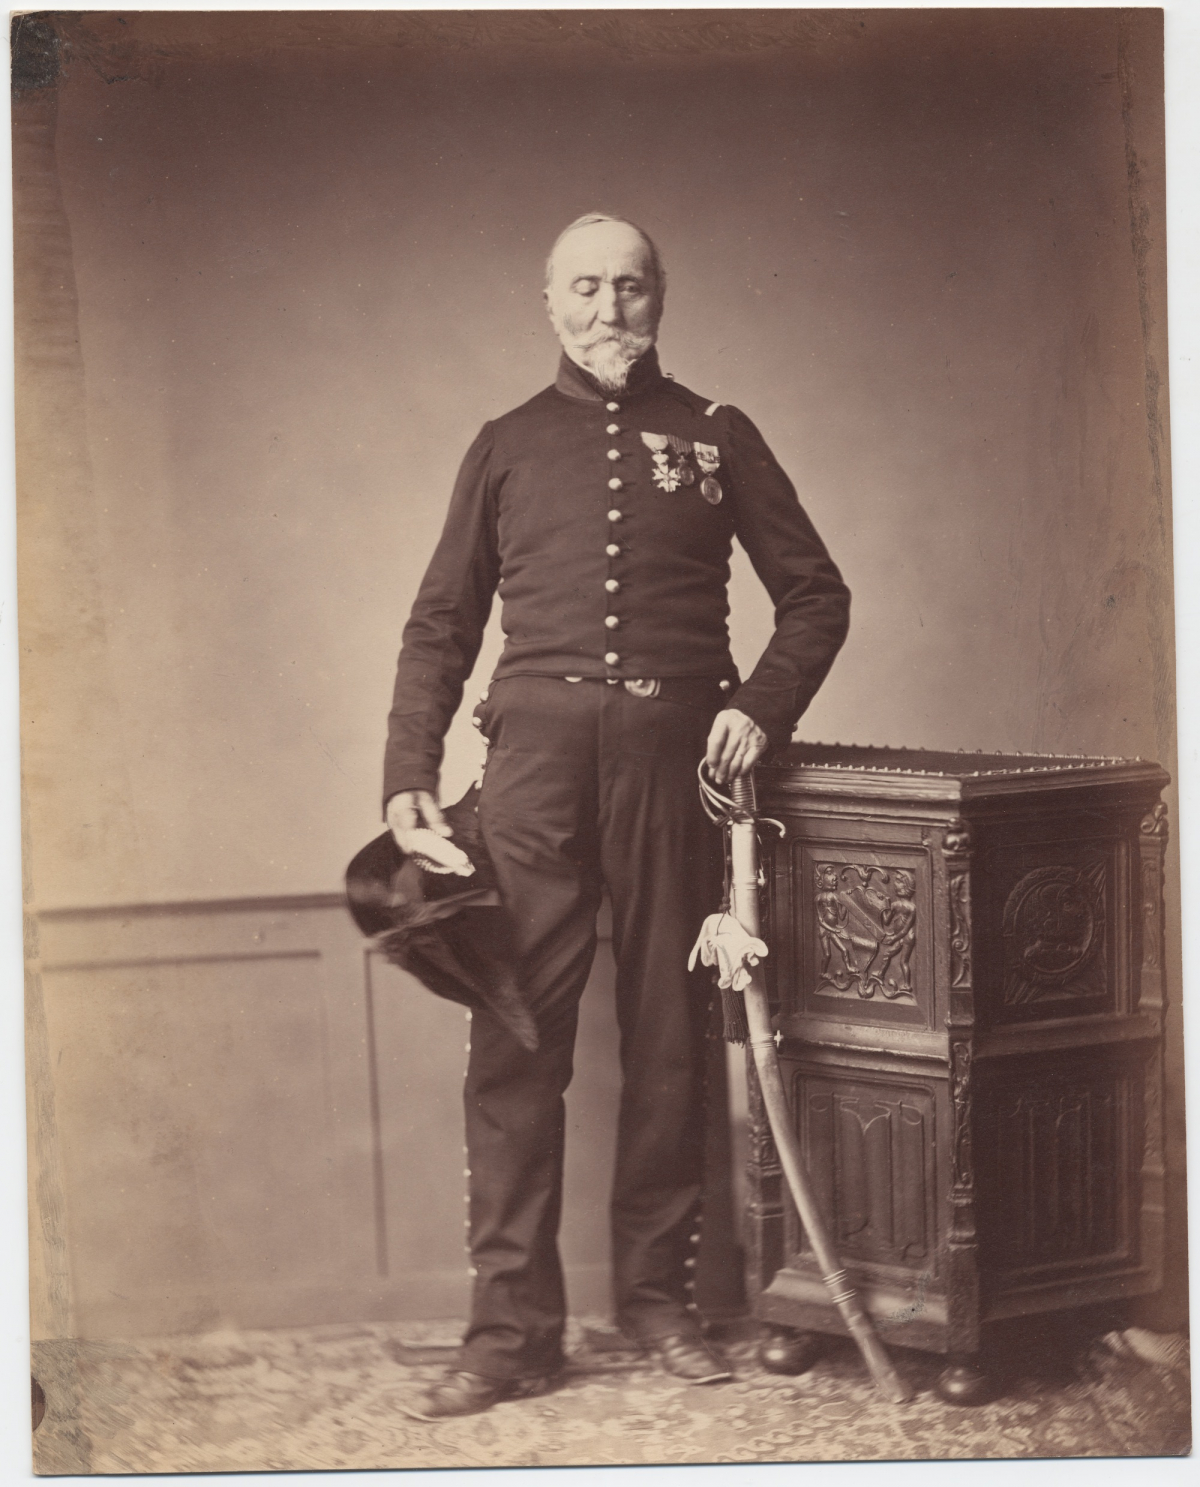 Monsieur Loria, 24th Mounted Chasseur, Regiment Chevalier